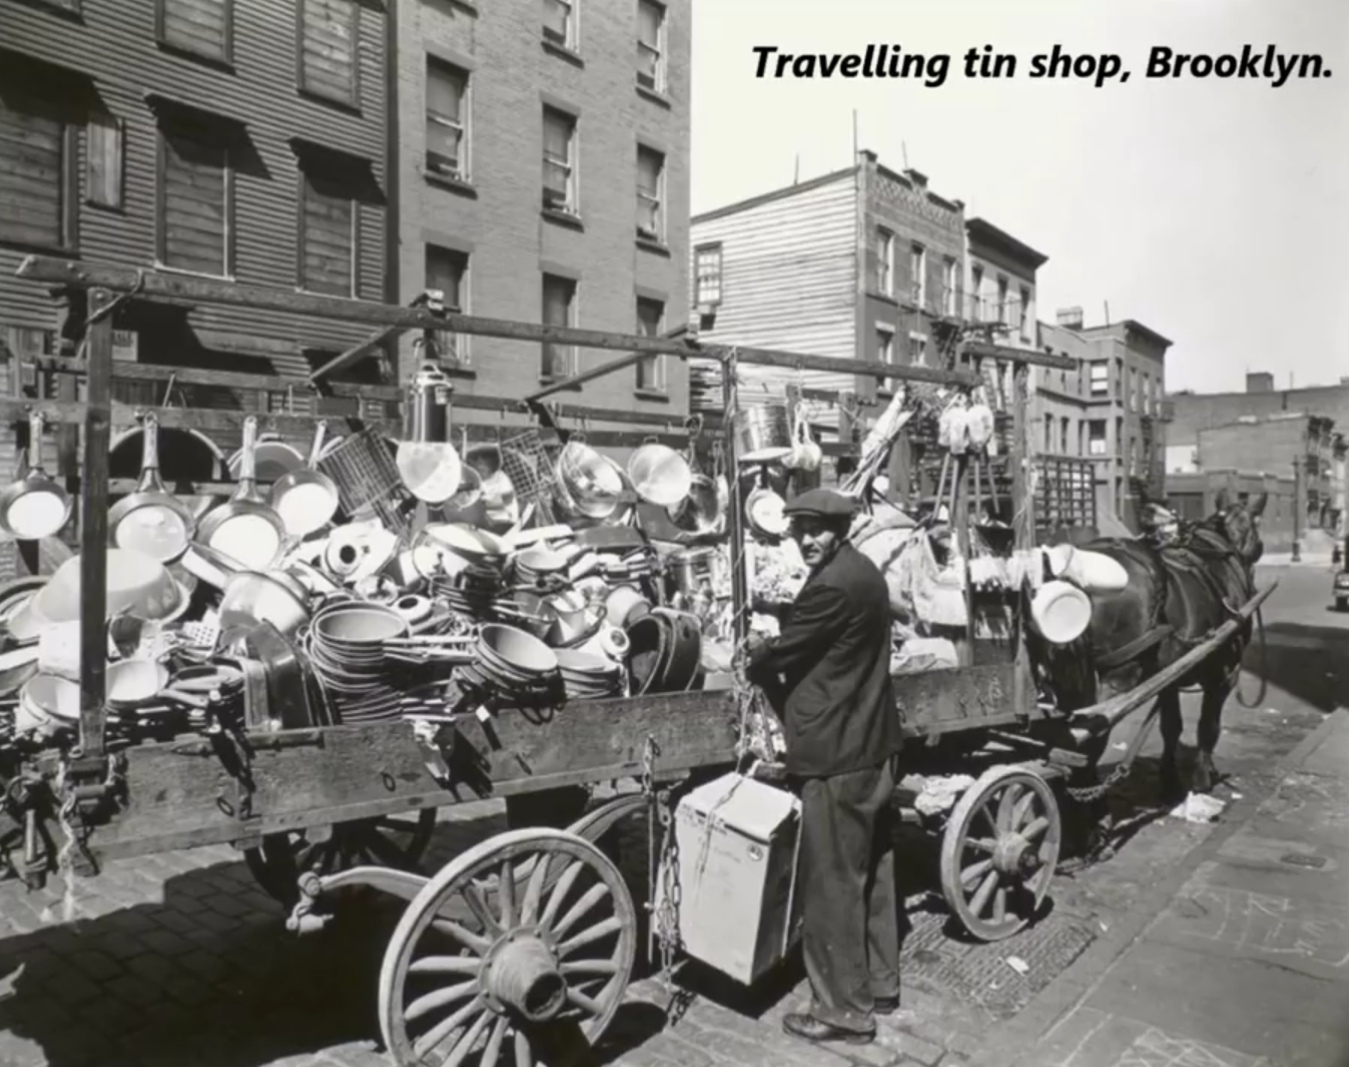 traveling tin shop - Lt Travelling tin shop, Brooklyn.